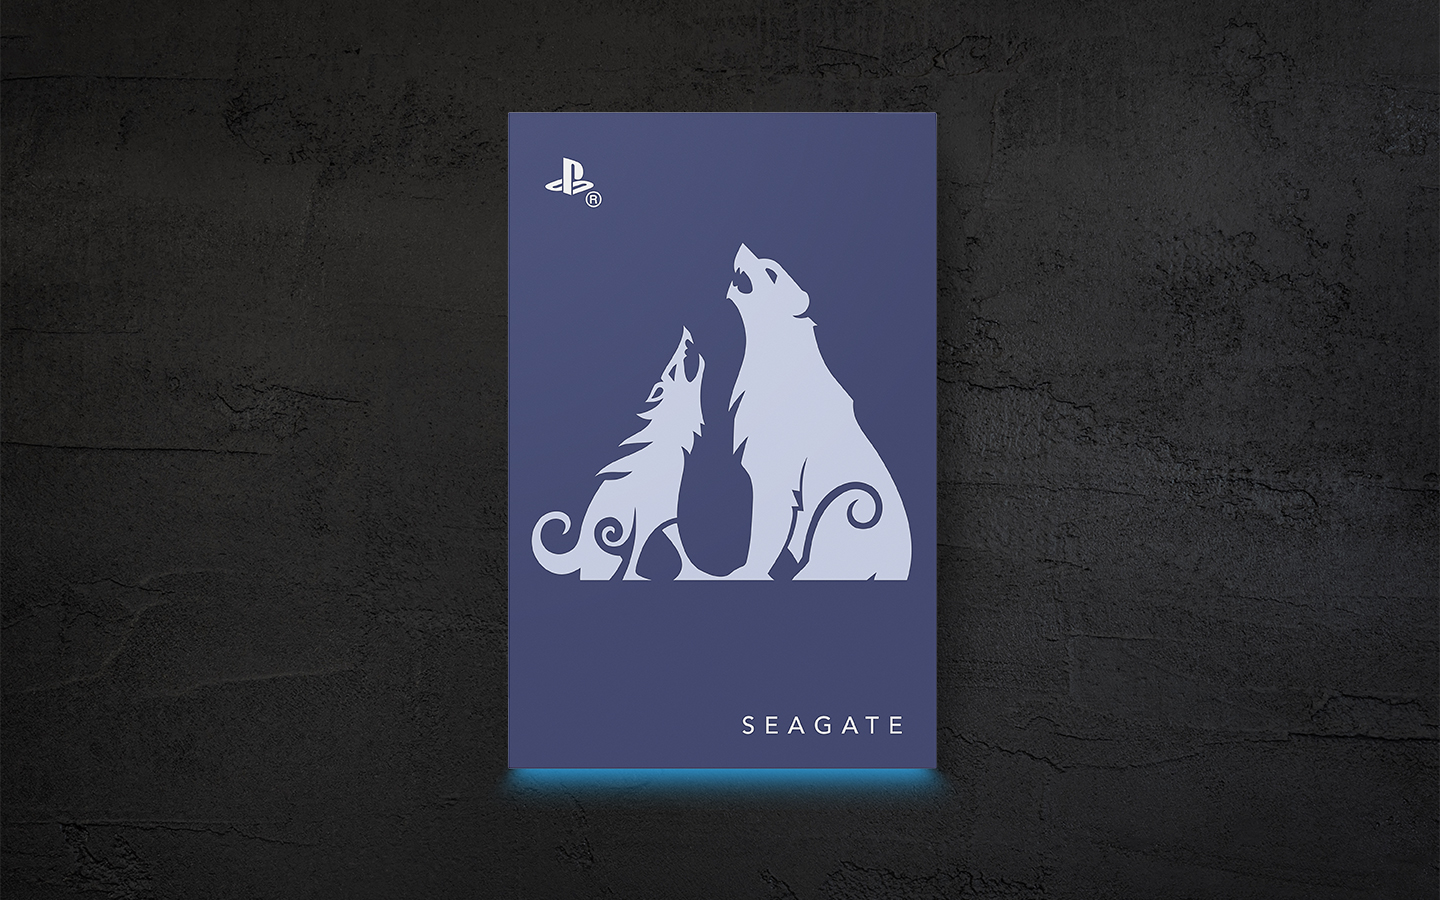 Seagate God of War: Ragnarok Special Edition Game Drive | Seagate US